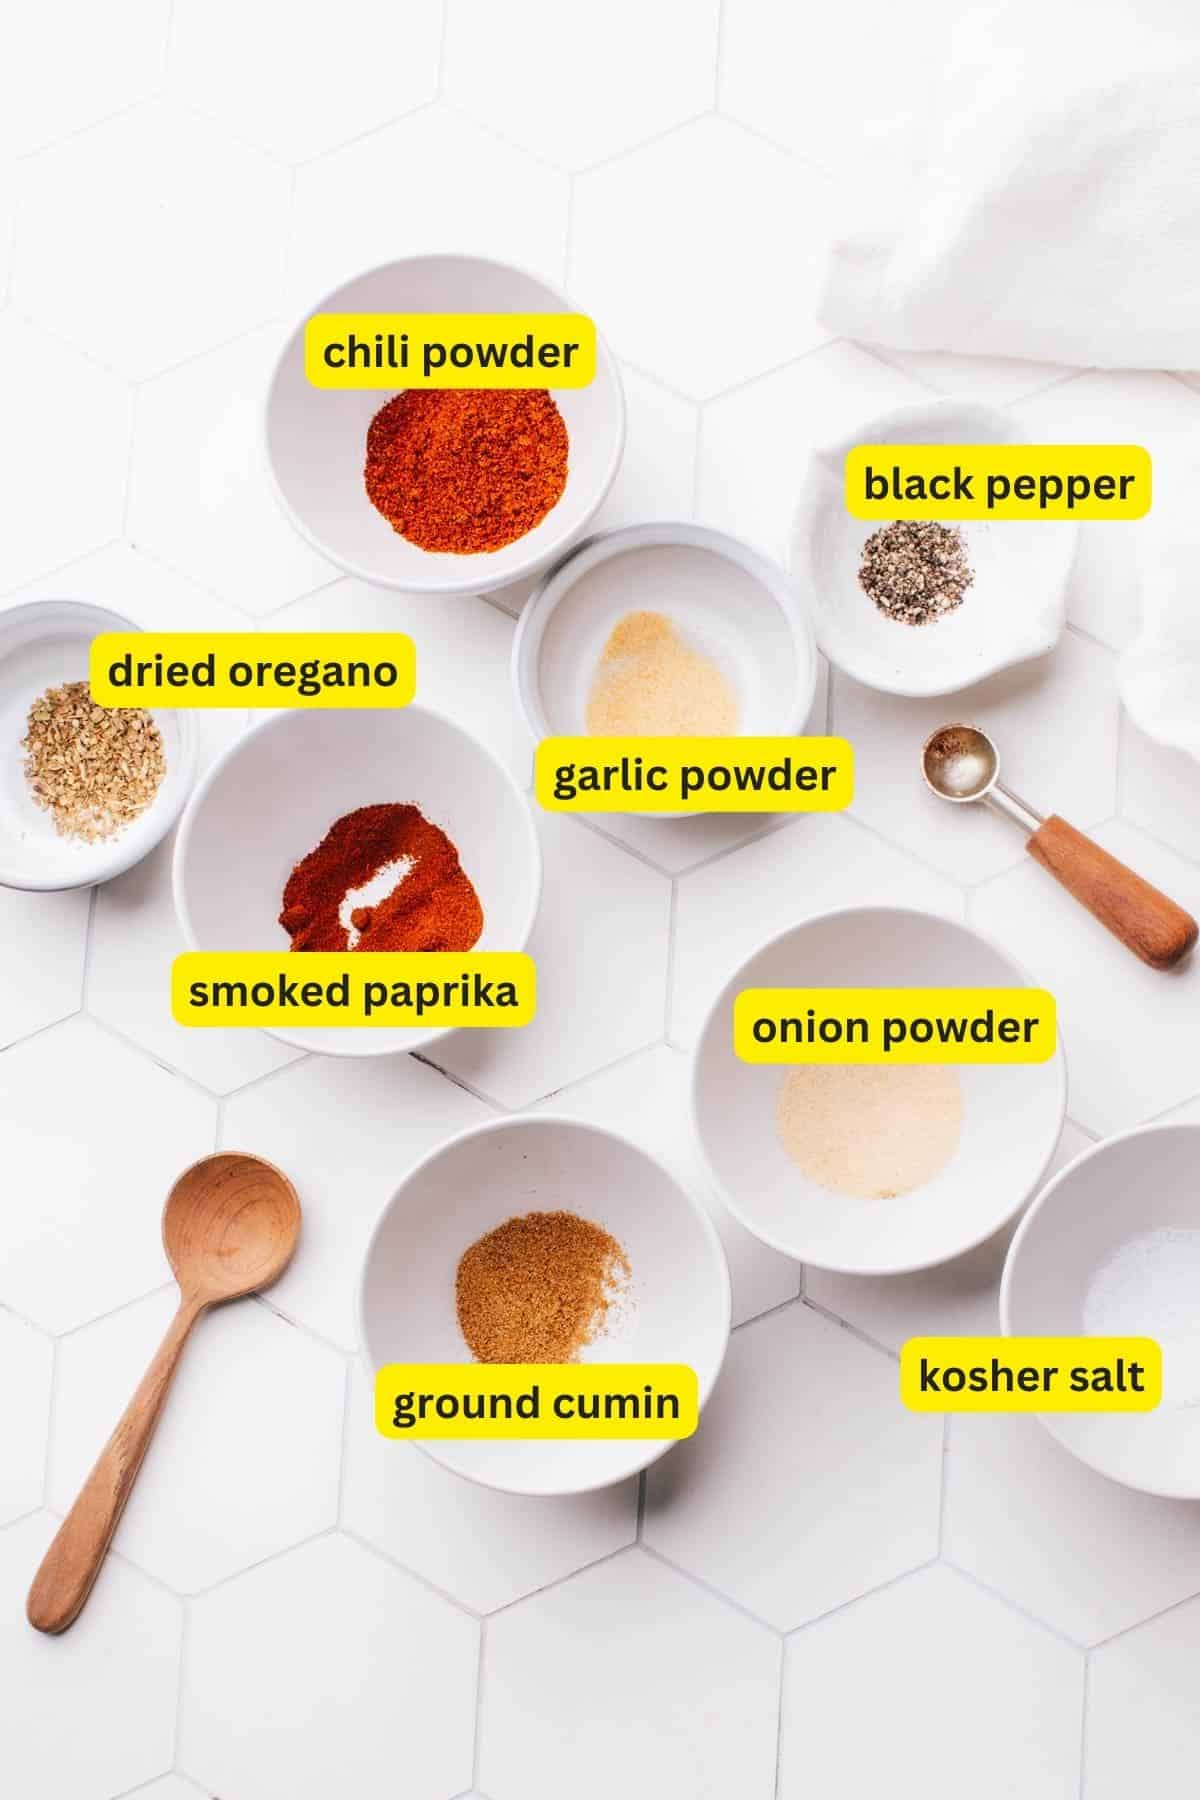 Ingredients for chicken taco seasoning laid out on a kitchen countertop, including chili powder, black pepper, dried oregano, garlic powder, smoked paprika, onion powder, ground cumin and kosher salt.